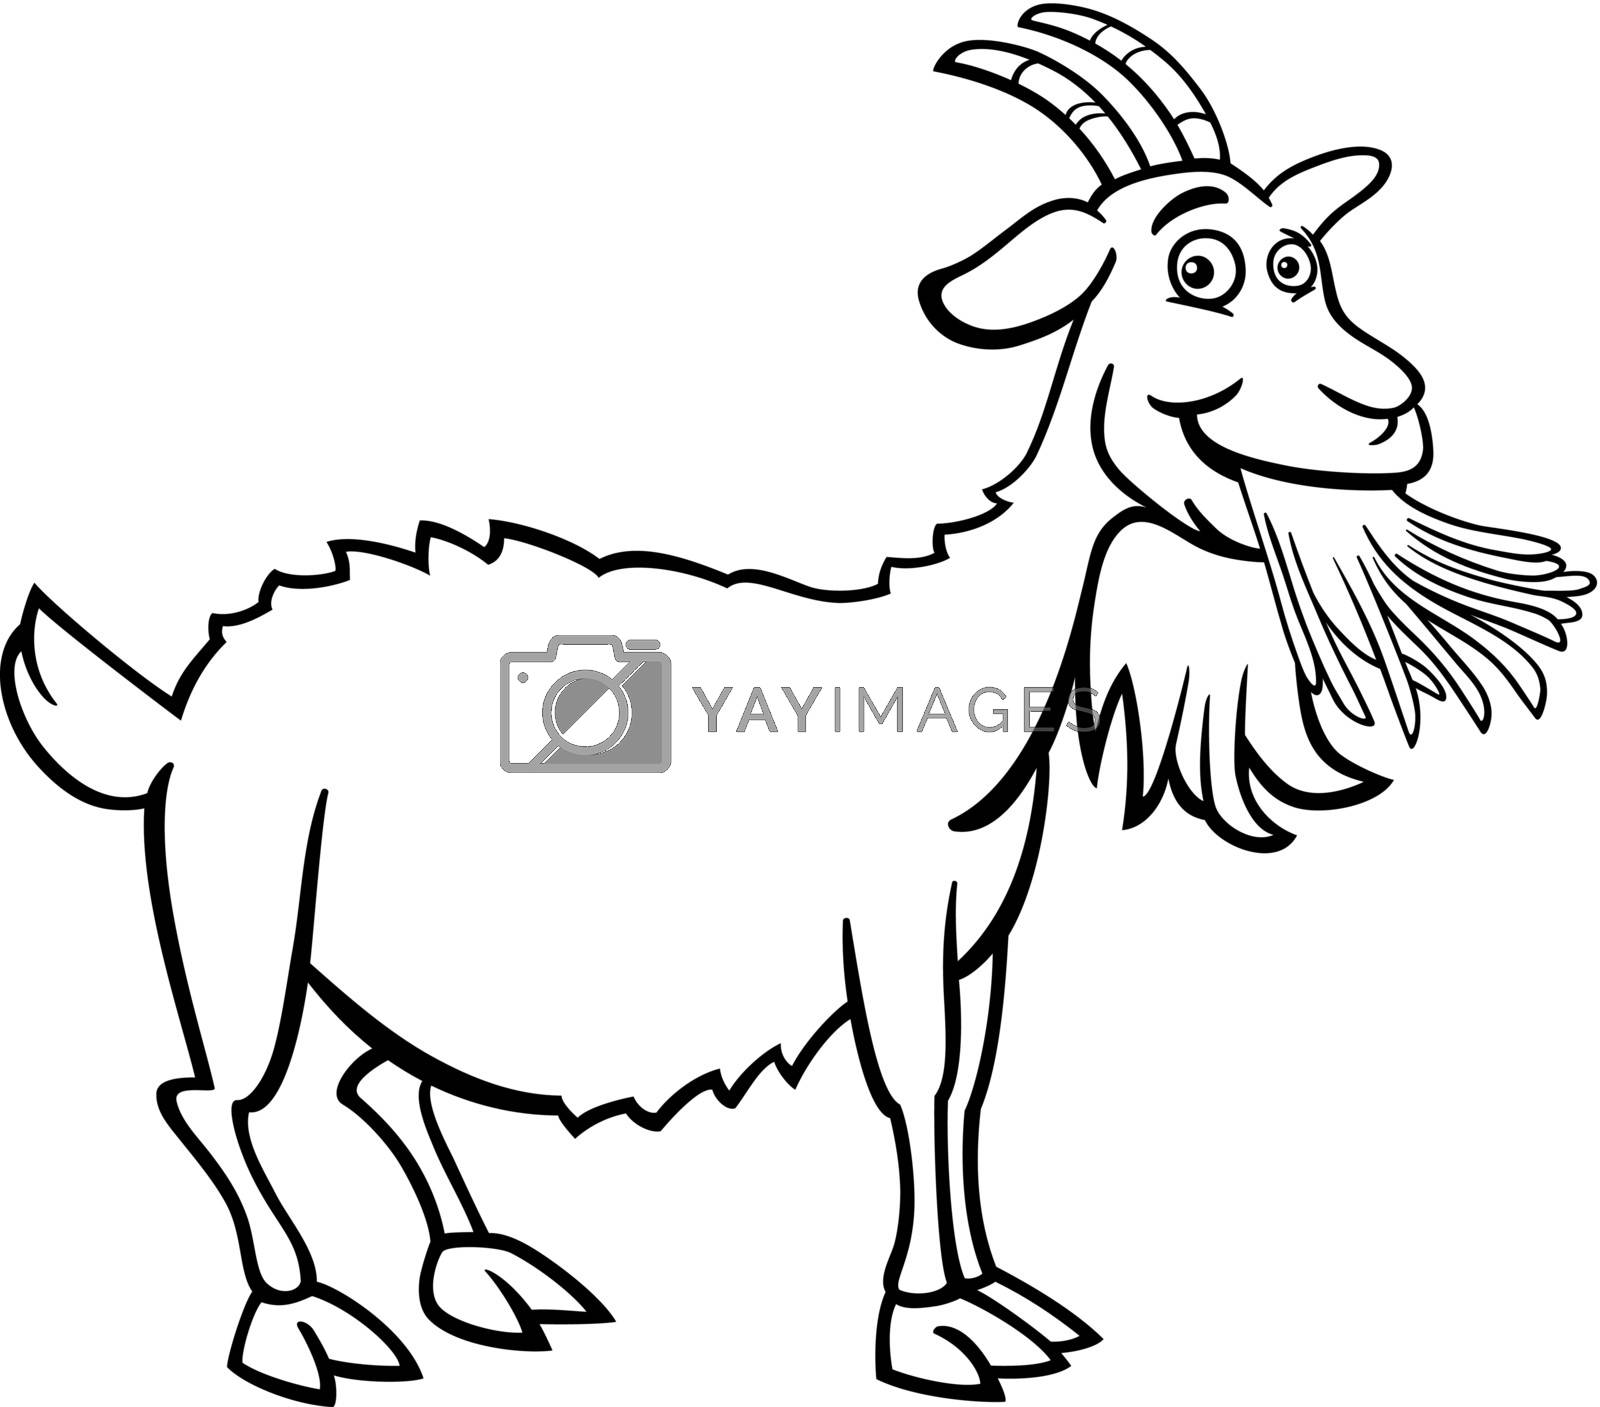 Royalty Free Vector | farm goat cartoon for coloring book by izakowski